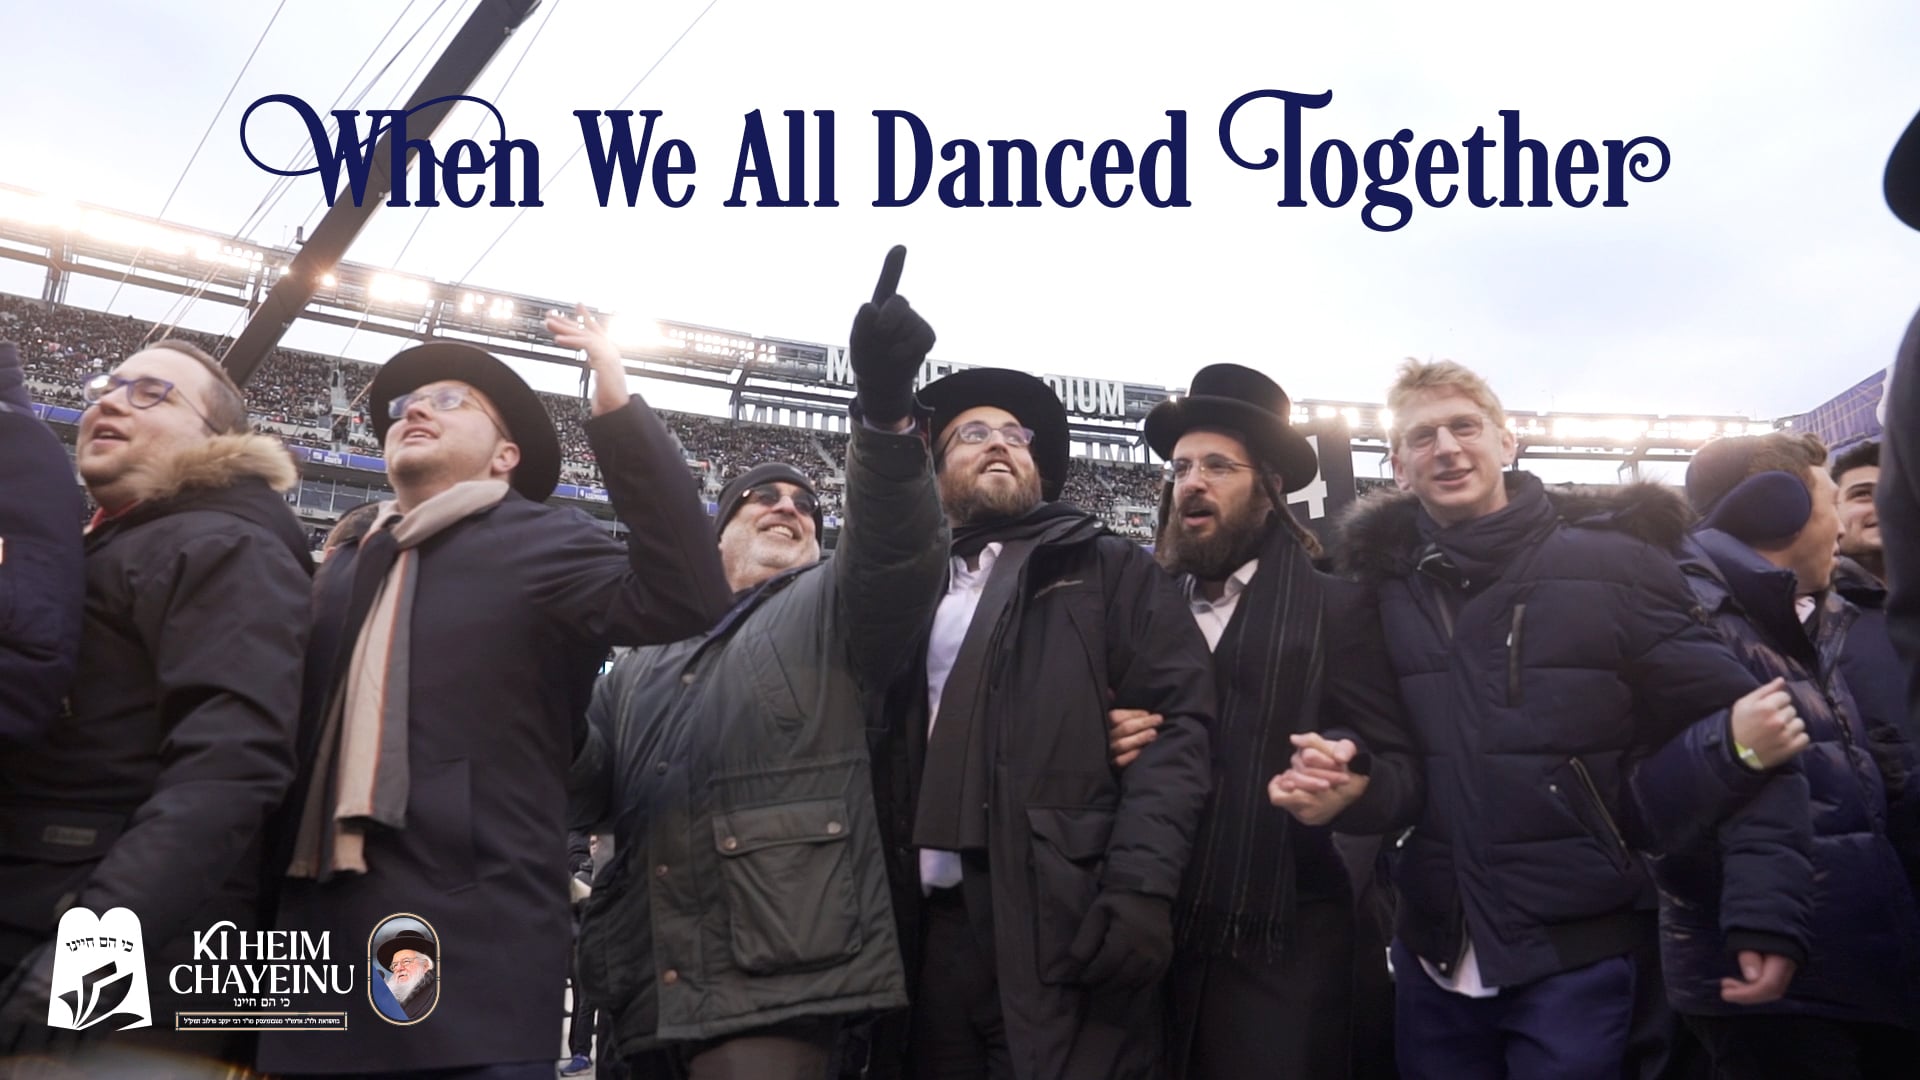 When We All Danced Together (ft. Baruch Levine, Shloime Taussig, Abish Brodt, & Uri Davidi)